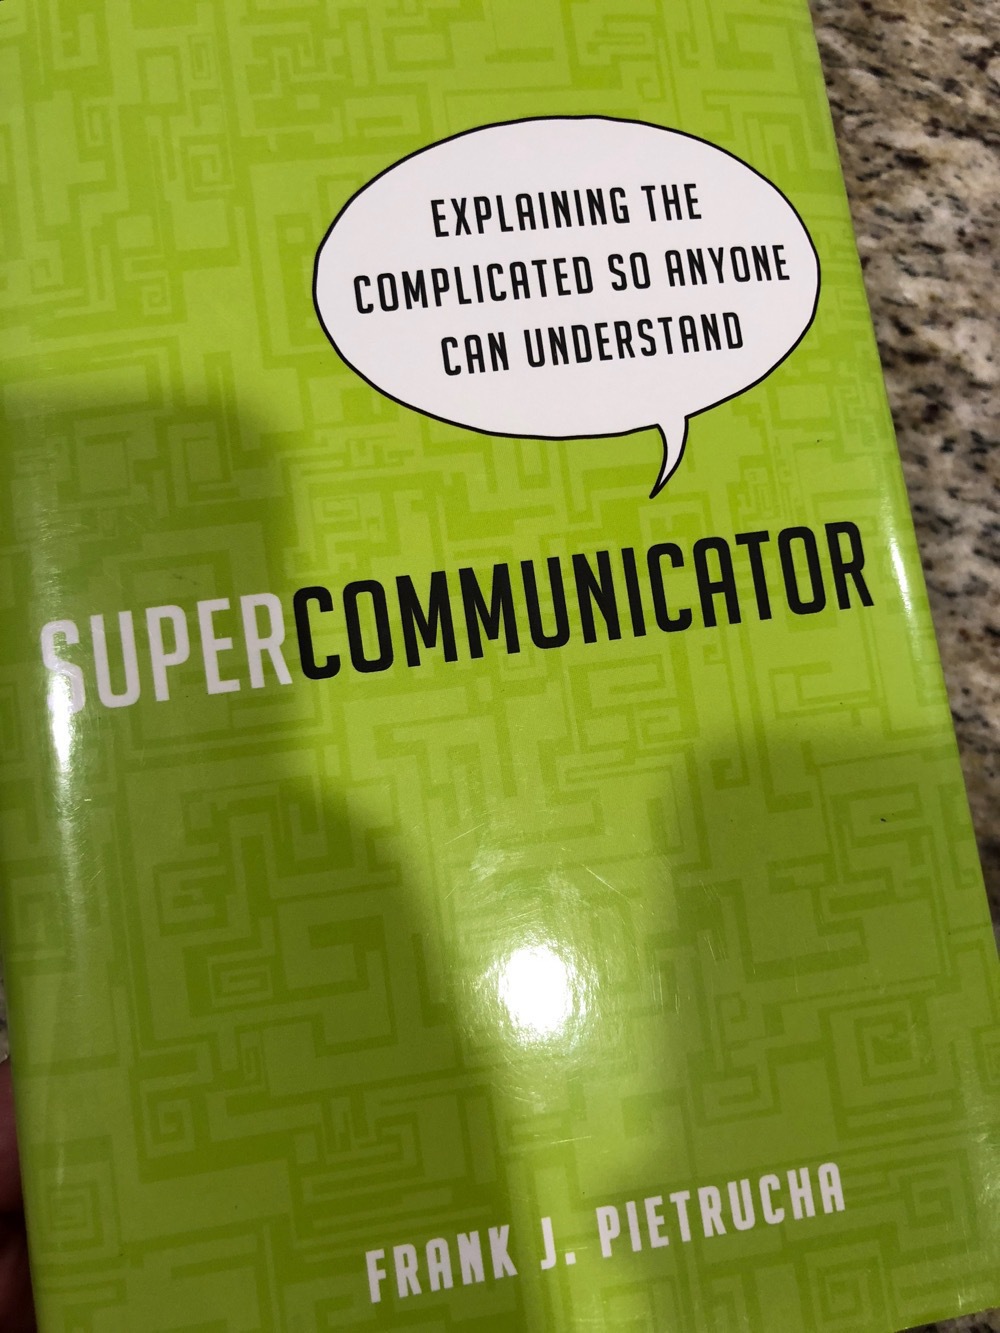 Super Communicator